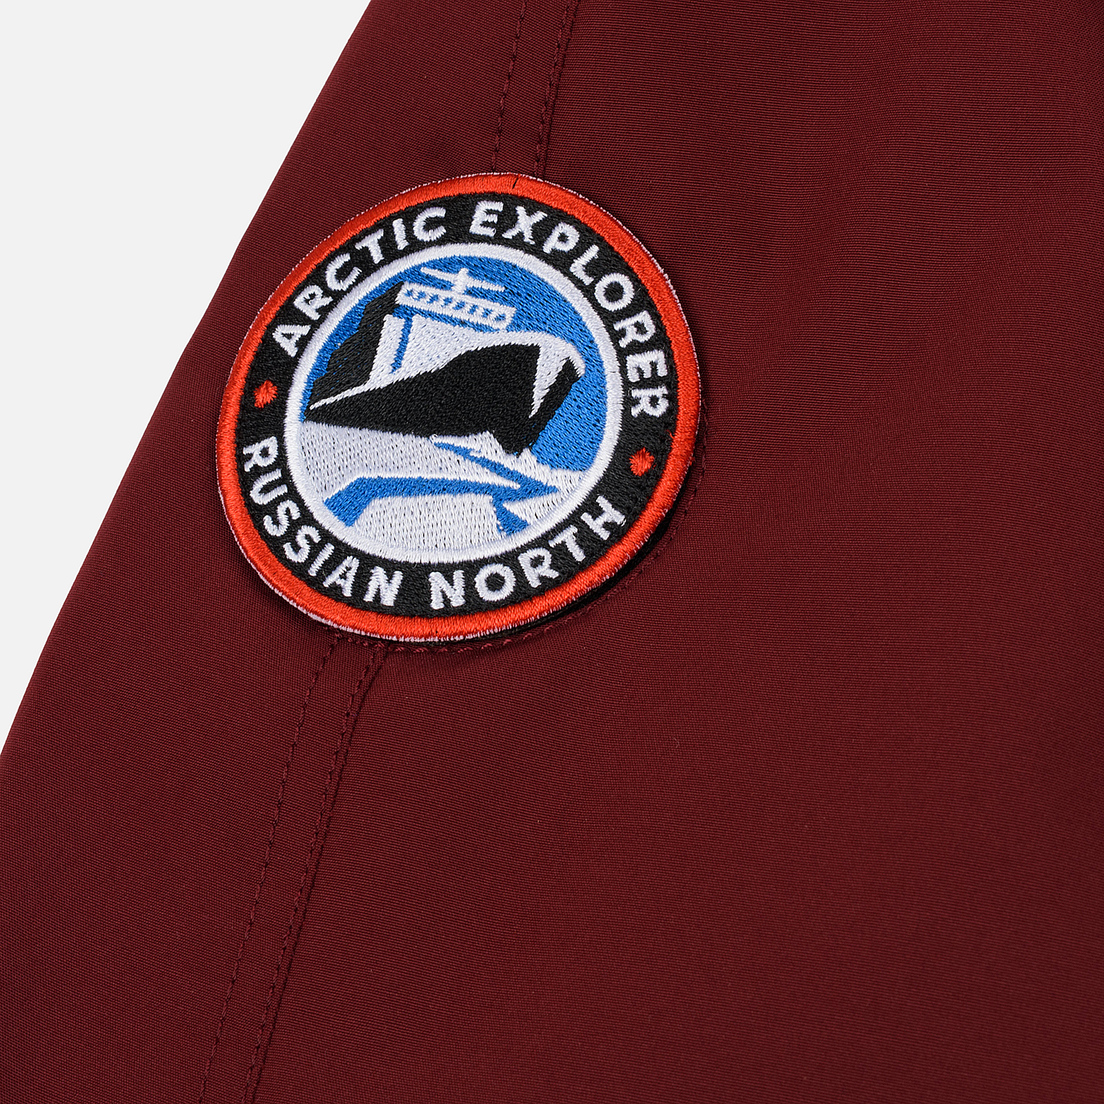 Arctic Explorer Мужская куртка парка Storm